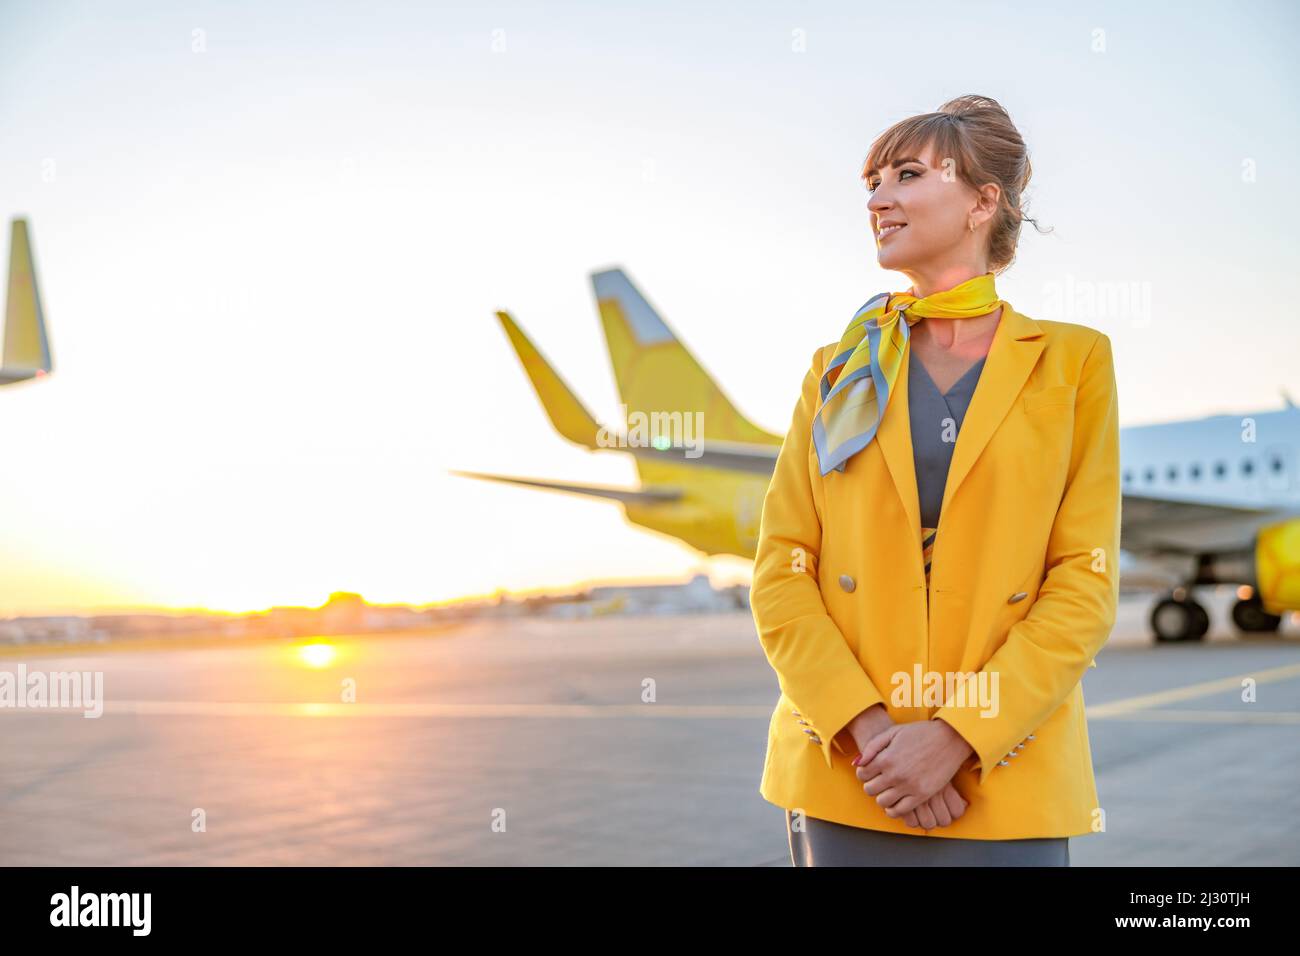 Joyful woman flight attendant standing outdoors at airfield Stock Photo